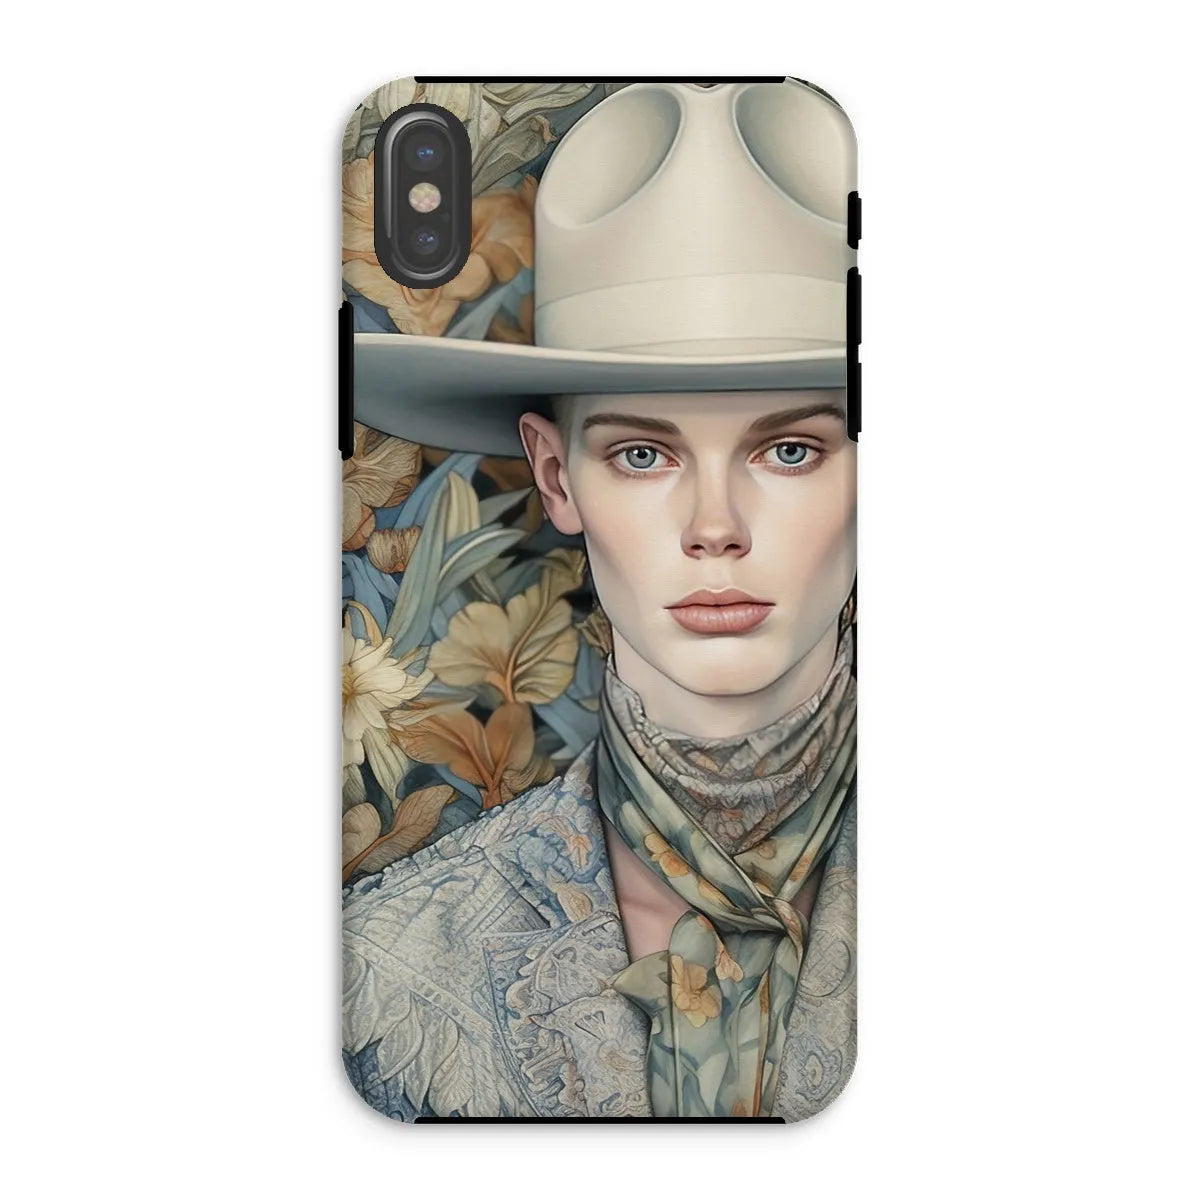 Jasper - Dandy Twink Cowboy Aesthetic Art Phone Case - Iphone Xs / Matte - Mobile Phone Cases - Aesthetic Art